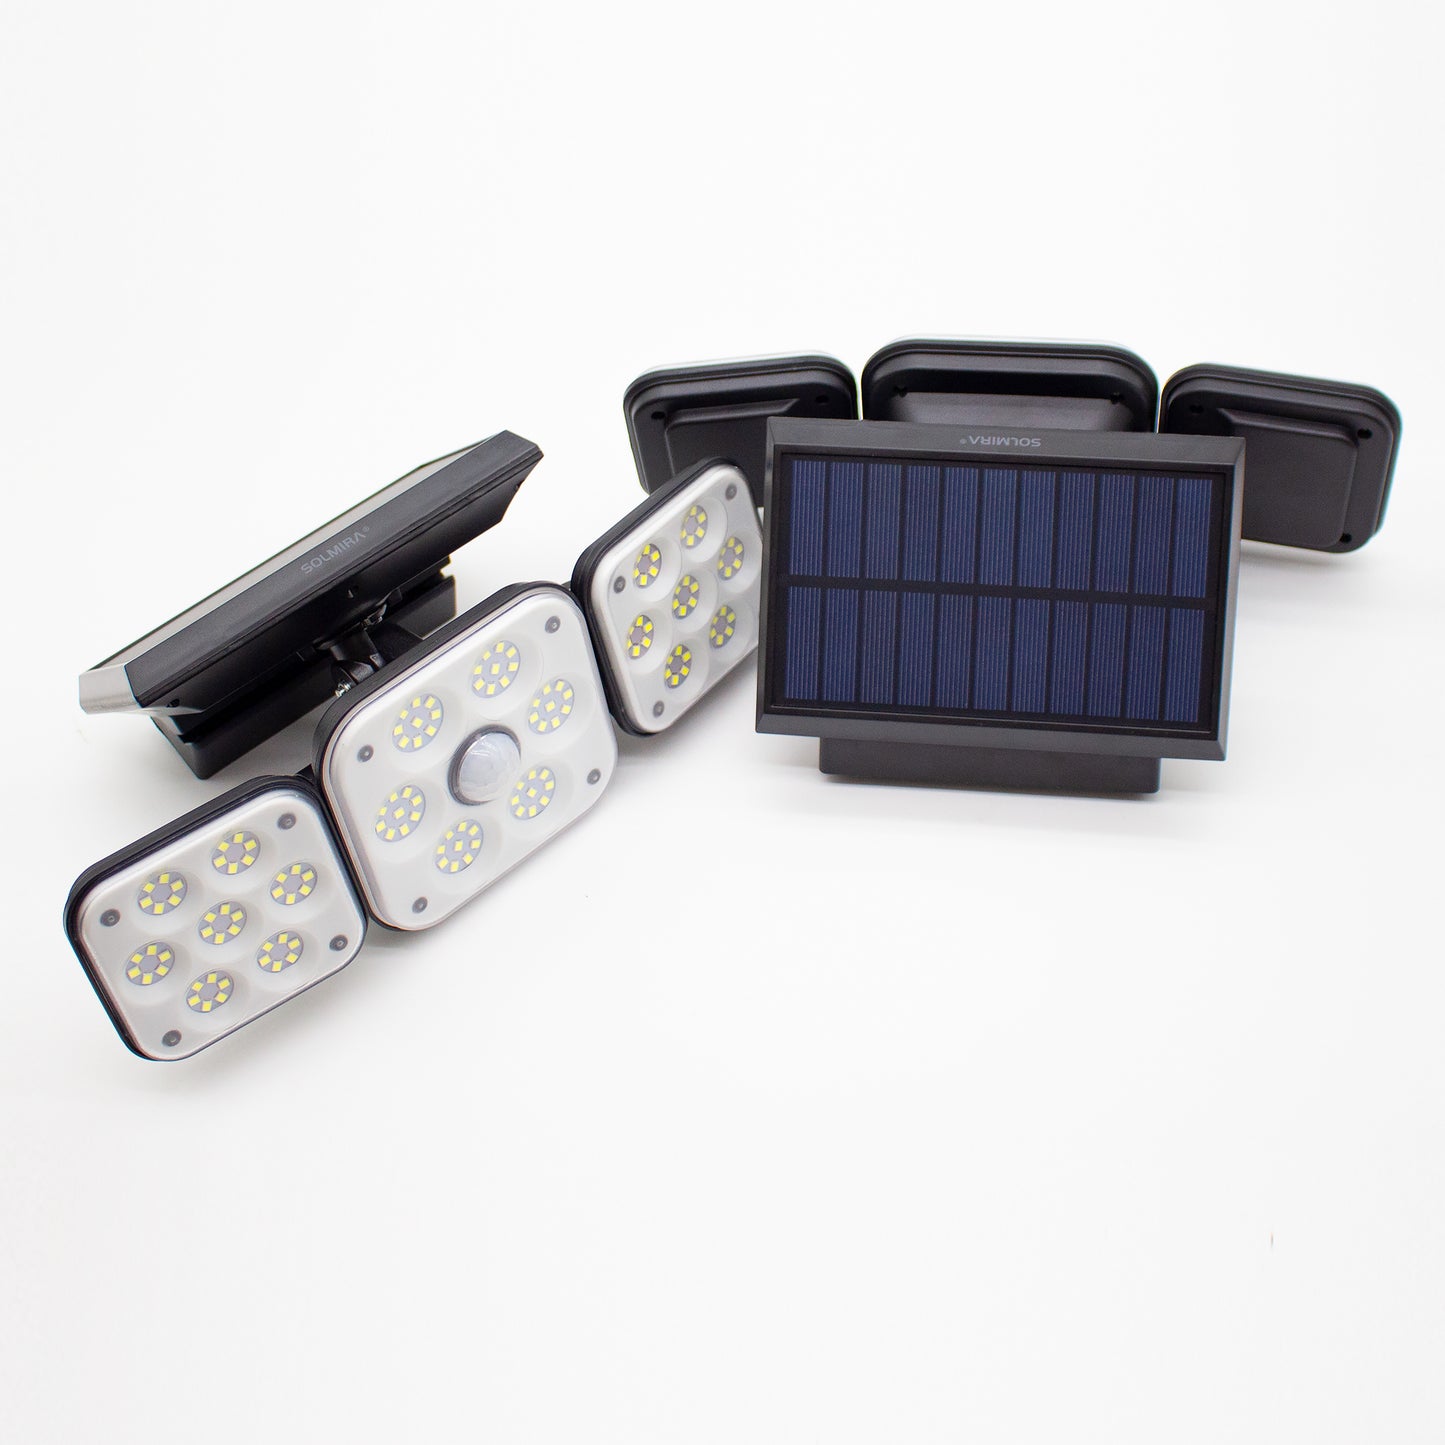 SOLMIRA® Luz Solar LED Exterior de Pared, Pack de 2 Apliques de 138 LEDs, Iluminación 270°, 3 Modos, Certificado CE y RoHS